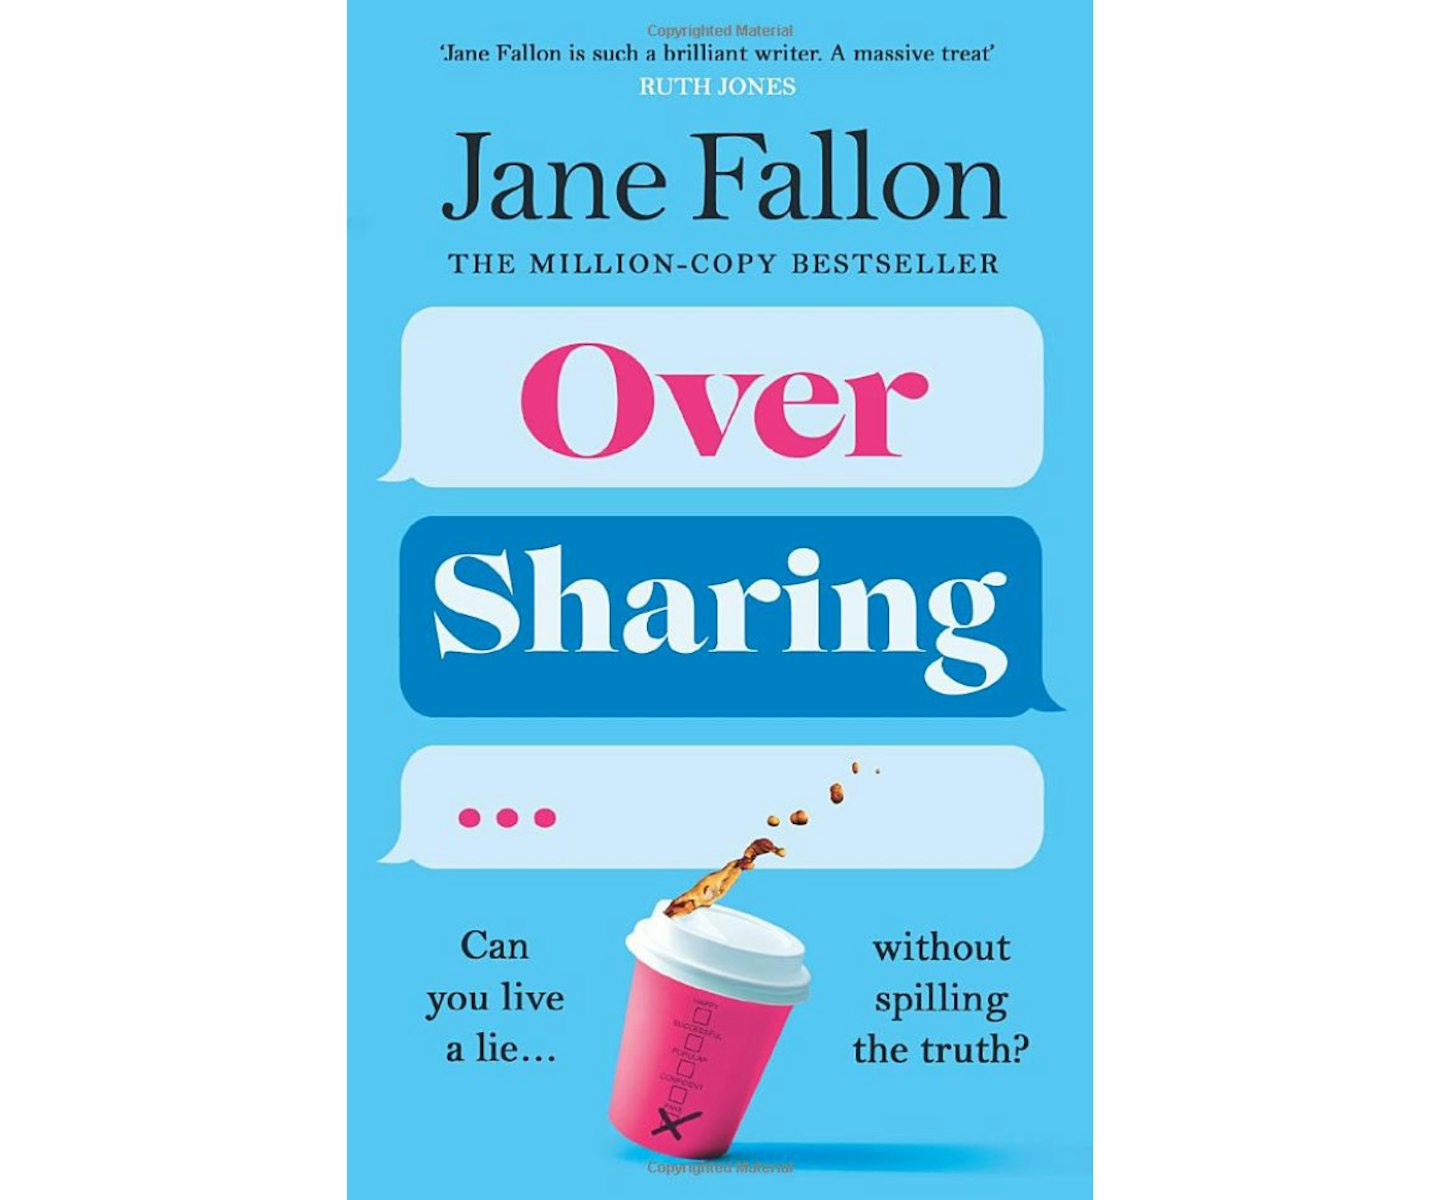 Oversharing by Jane Fallon